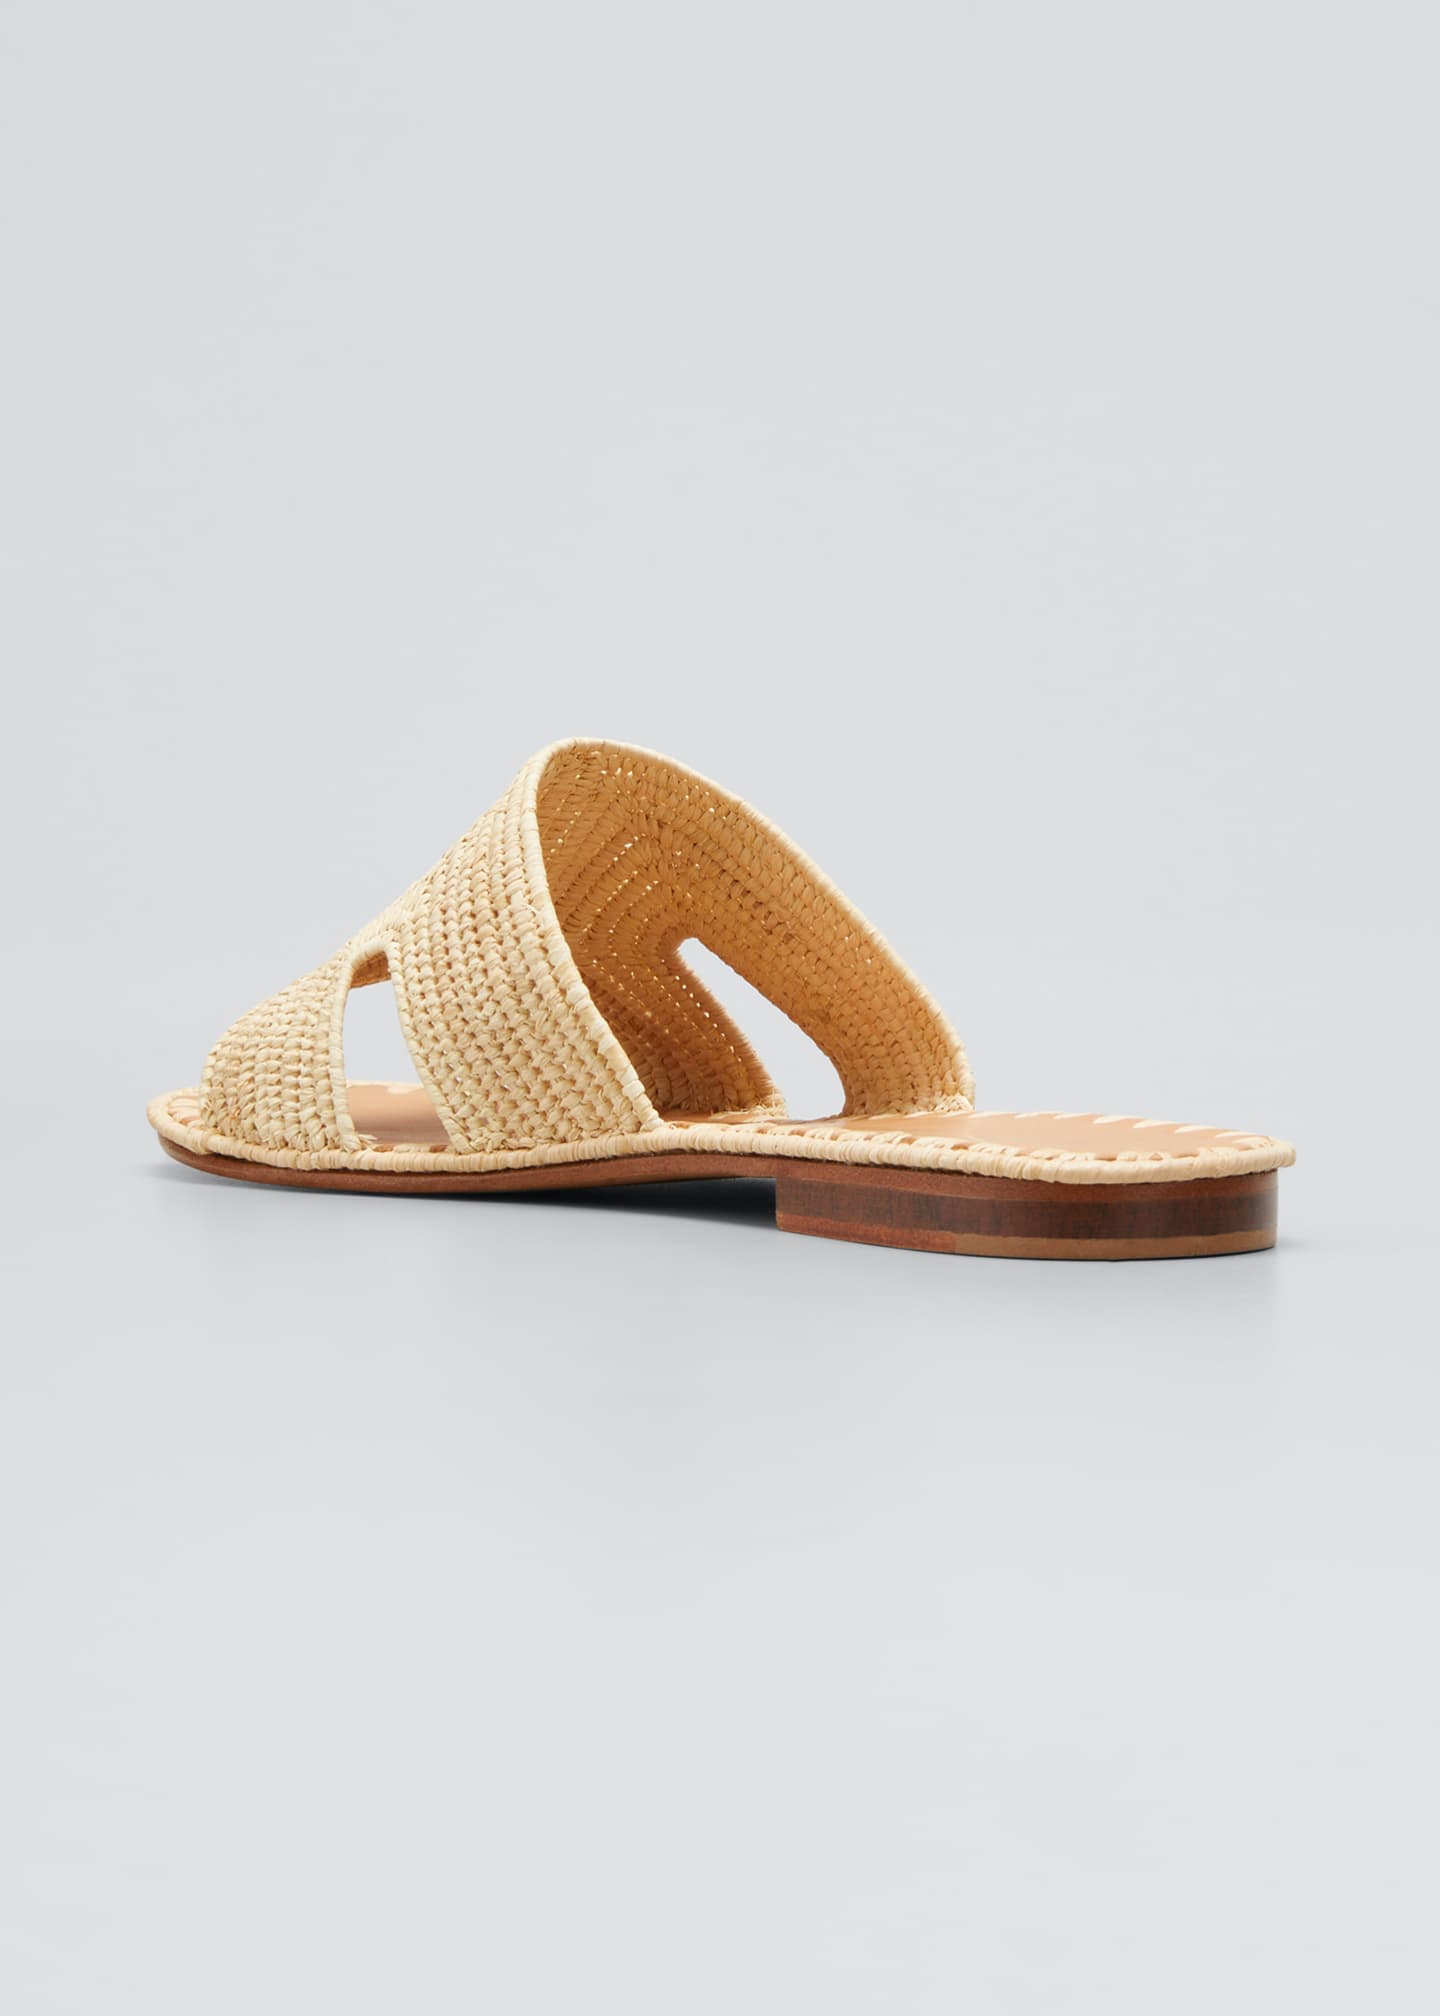 Carrie Forbes Cuadro Raffia Flat Slide Sandals - Bergdorf Goodman